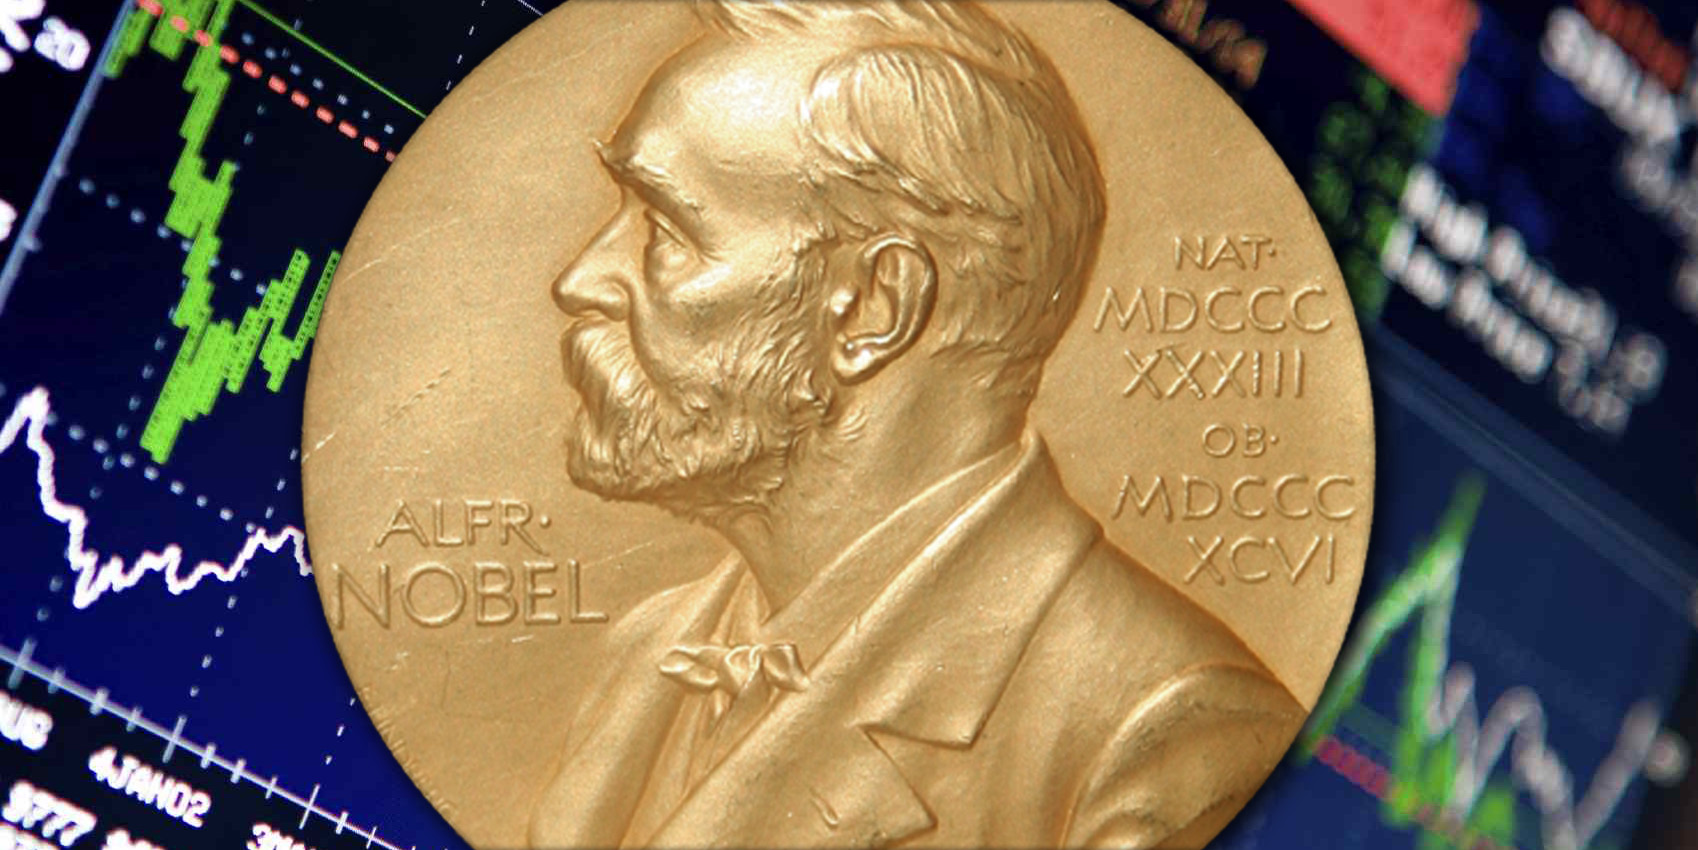 Two economists share 2016 Nobel Prize in Economics